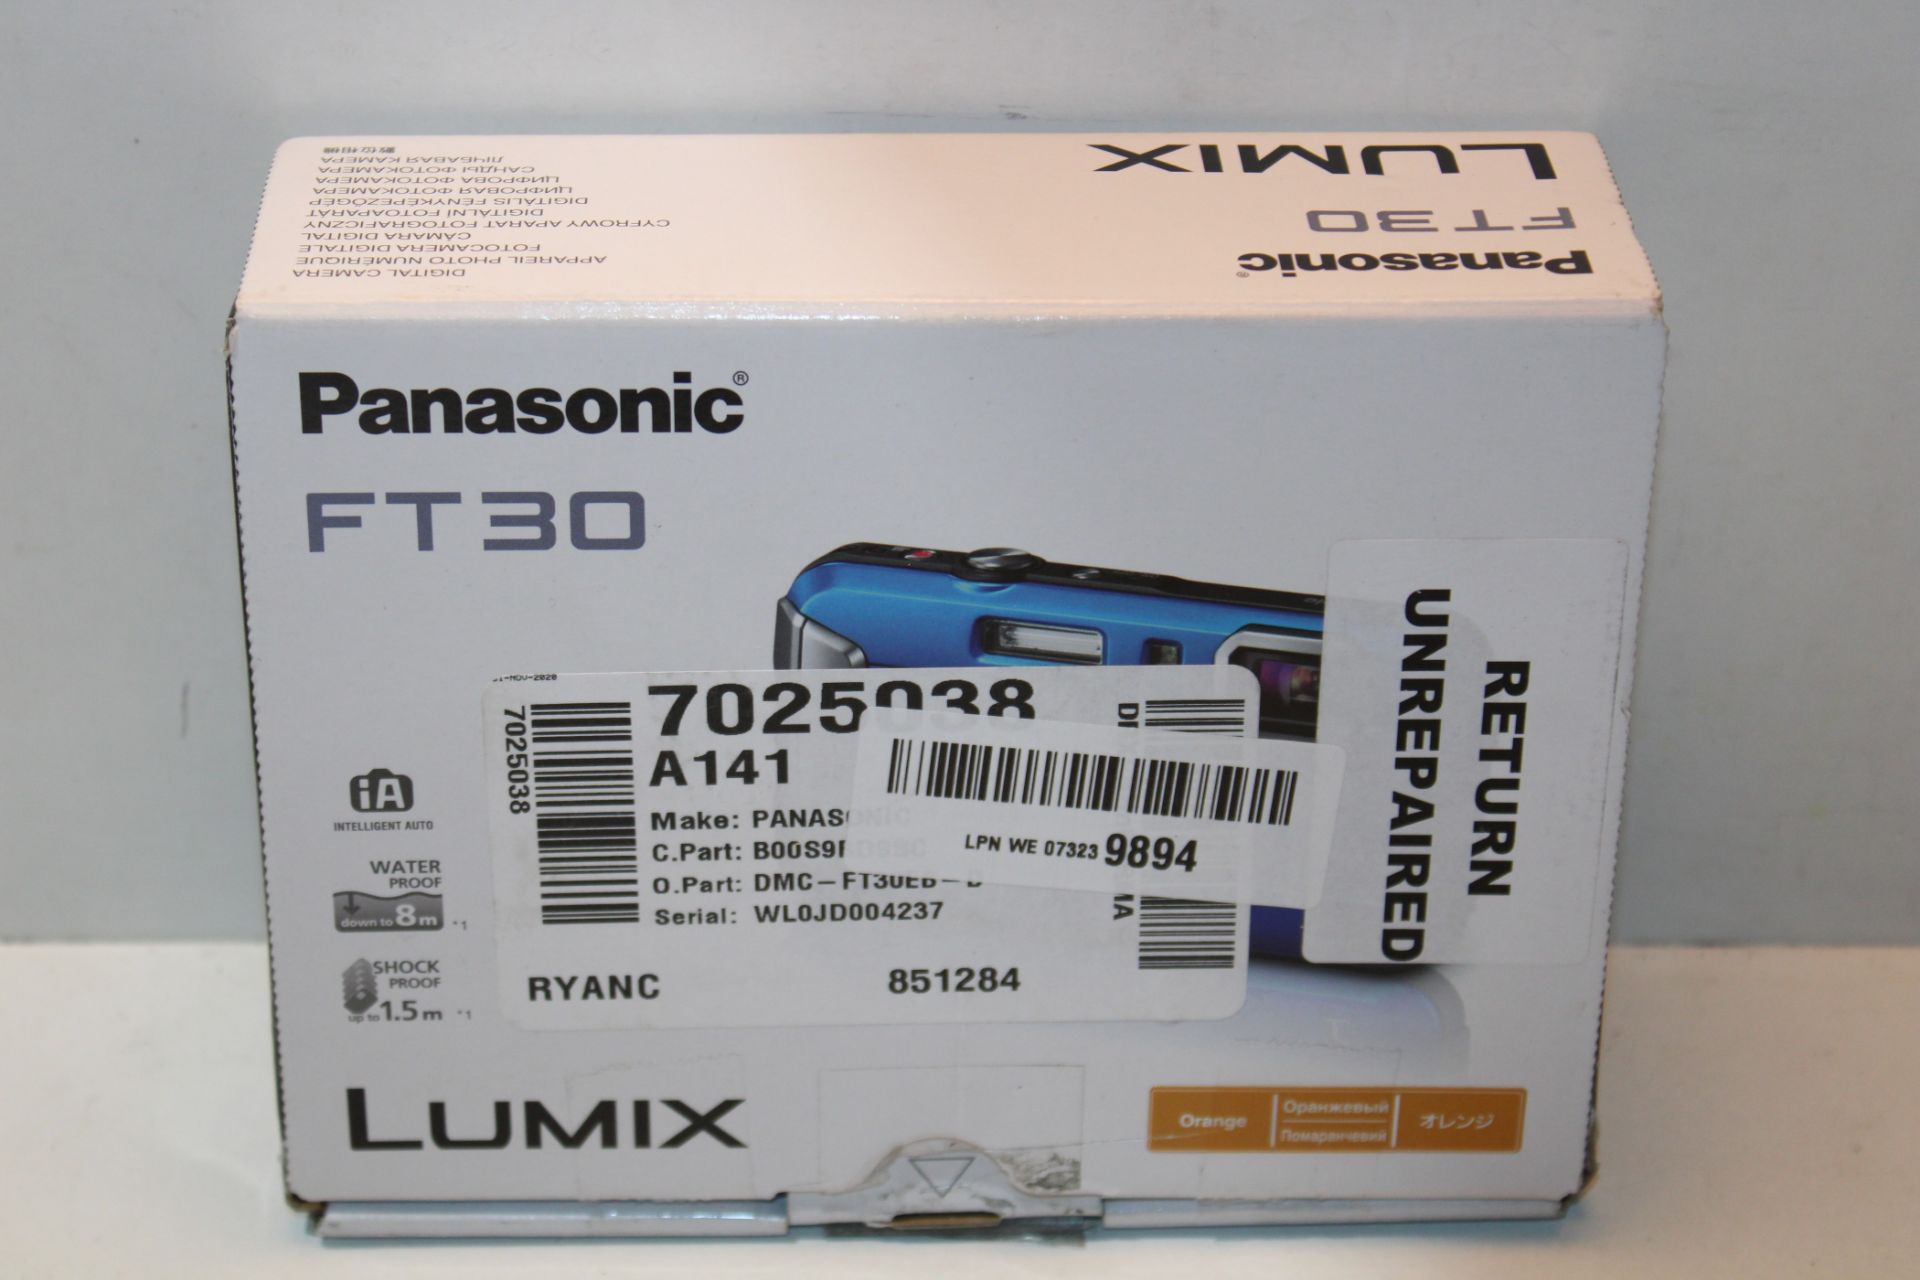 Panasonic LUMIX DMC-FT30EB-D Tough Waterproof Compact Digital Camera - Orange £93.79Condition